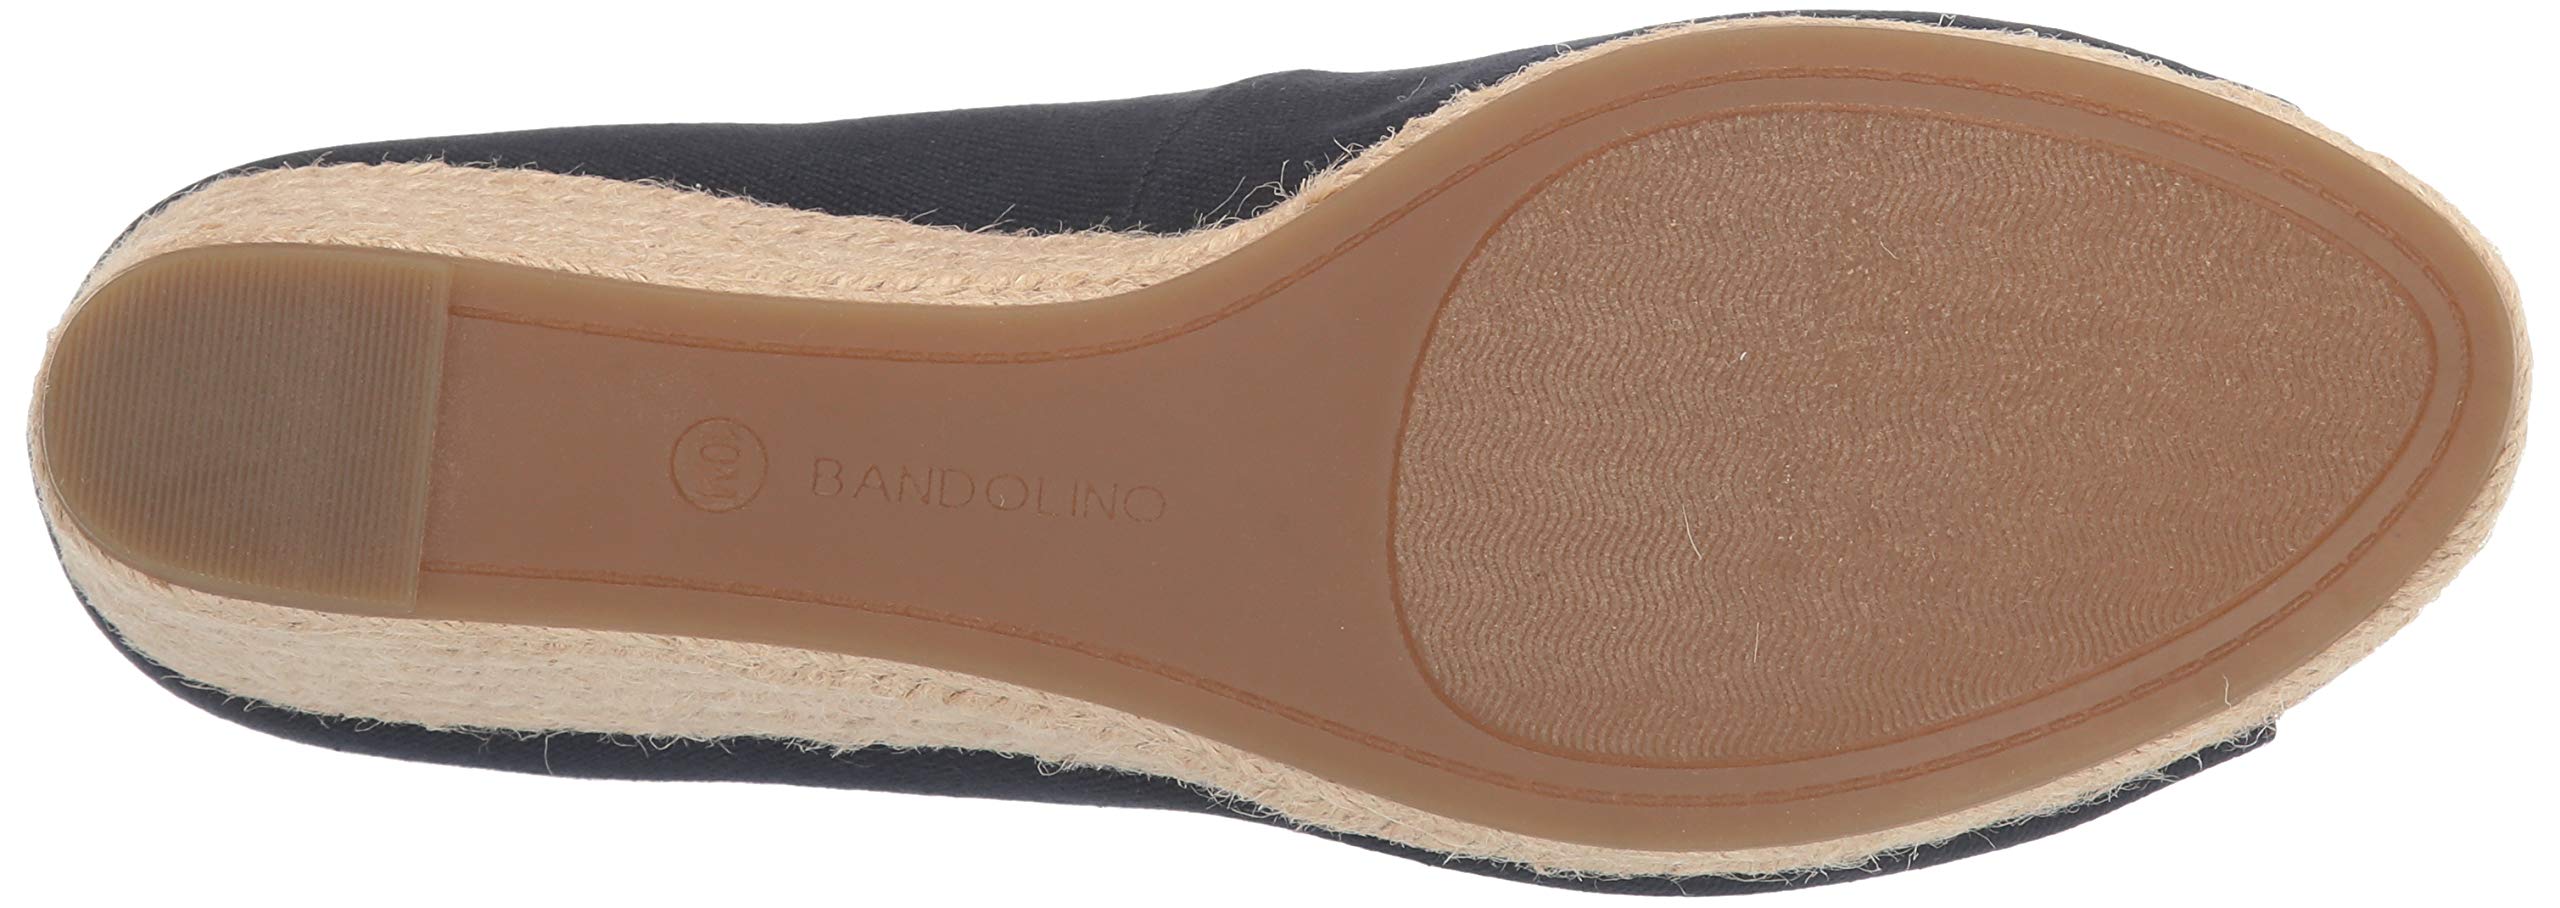 Bandolino Women's Wedge Sandal